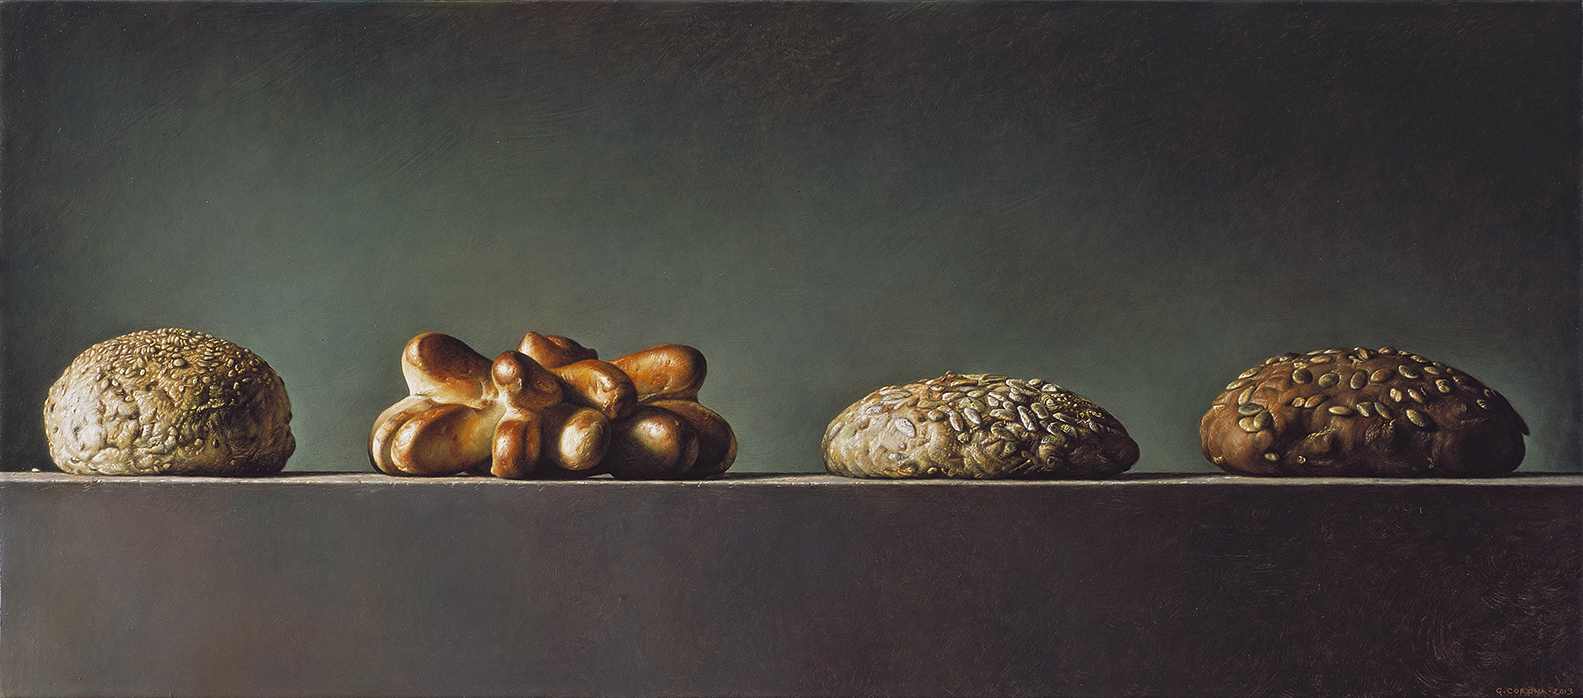 Bread Parade - 2013 olio su tavola incamottata cm 24,5x55 © Gianluca Corona